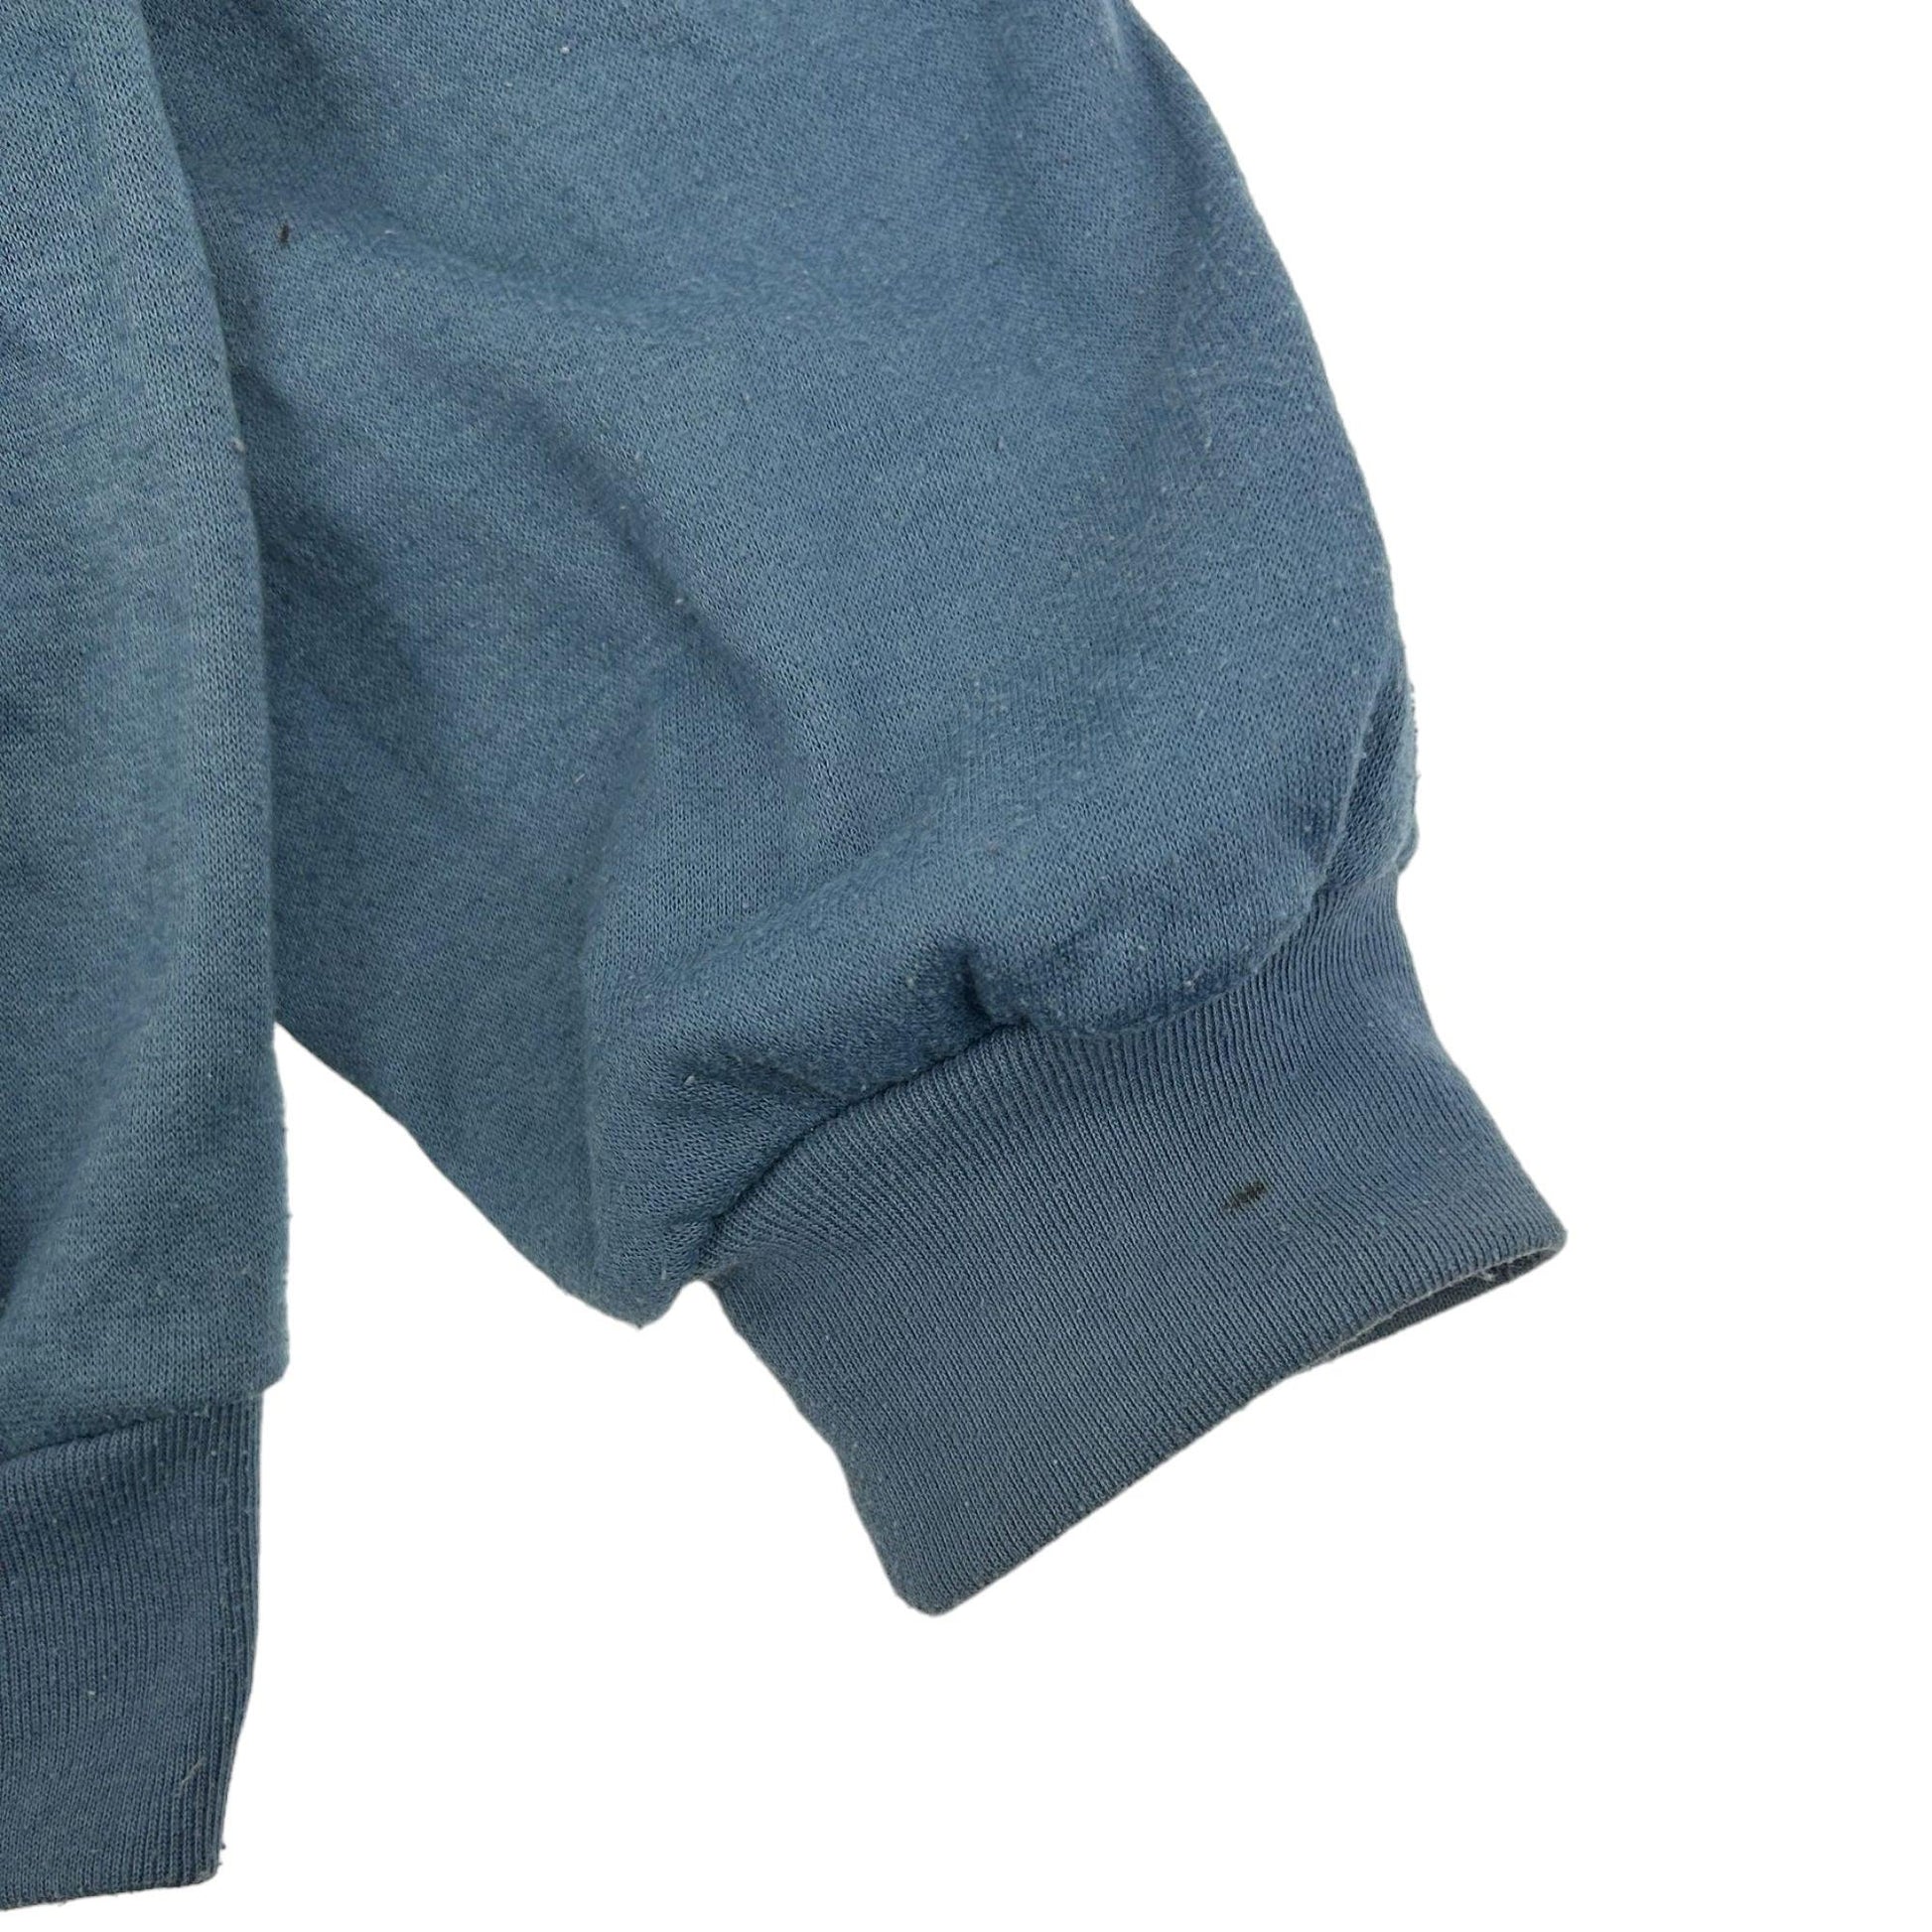 Vintage Umbro Sweatshirt Size L - Known Source